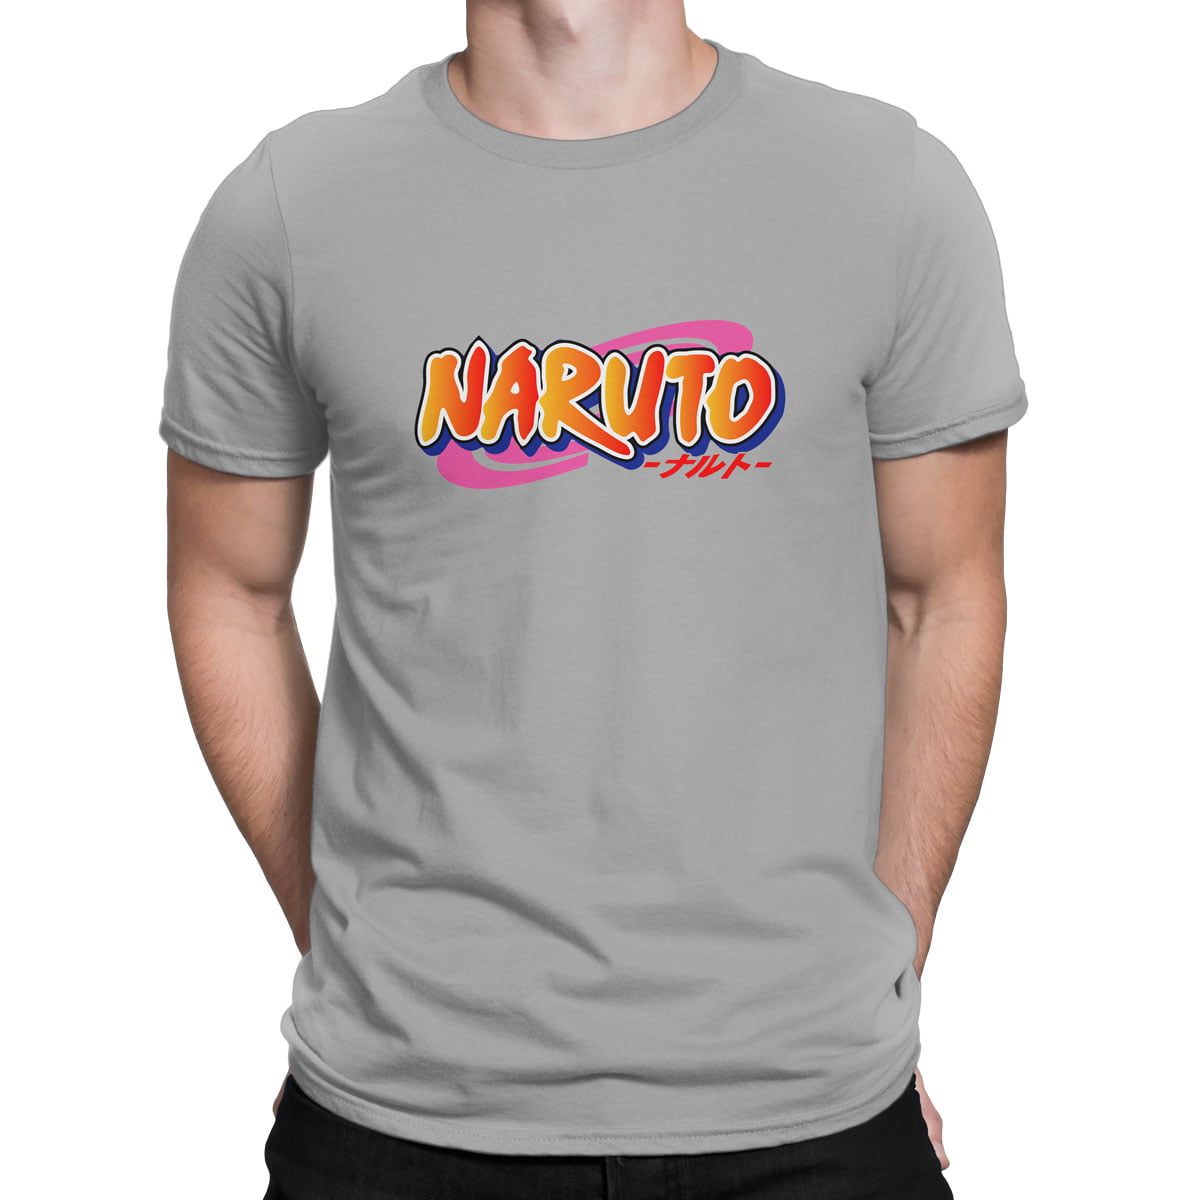 Naruto uzumaki no3 logo tisort erkek g - naruto uzumaki logo baskılı t-shirt - figurex